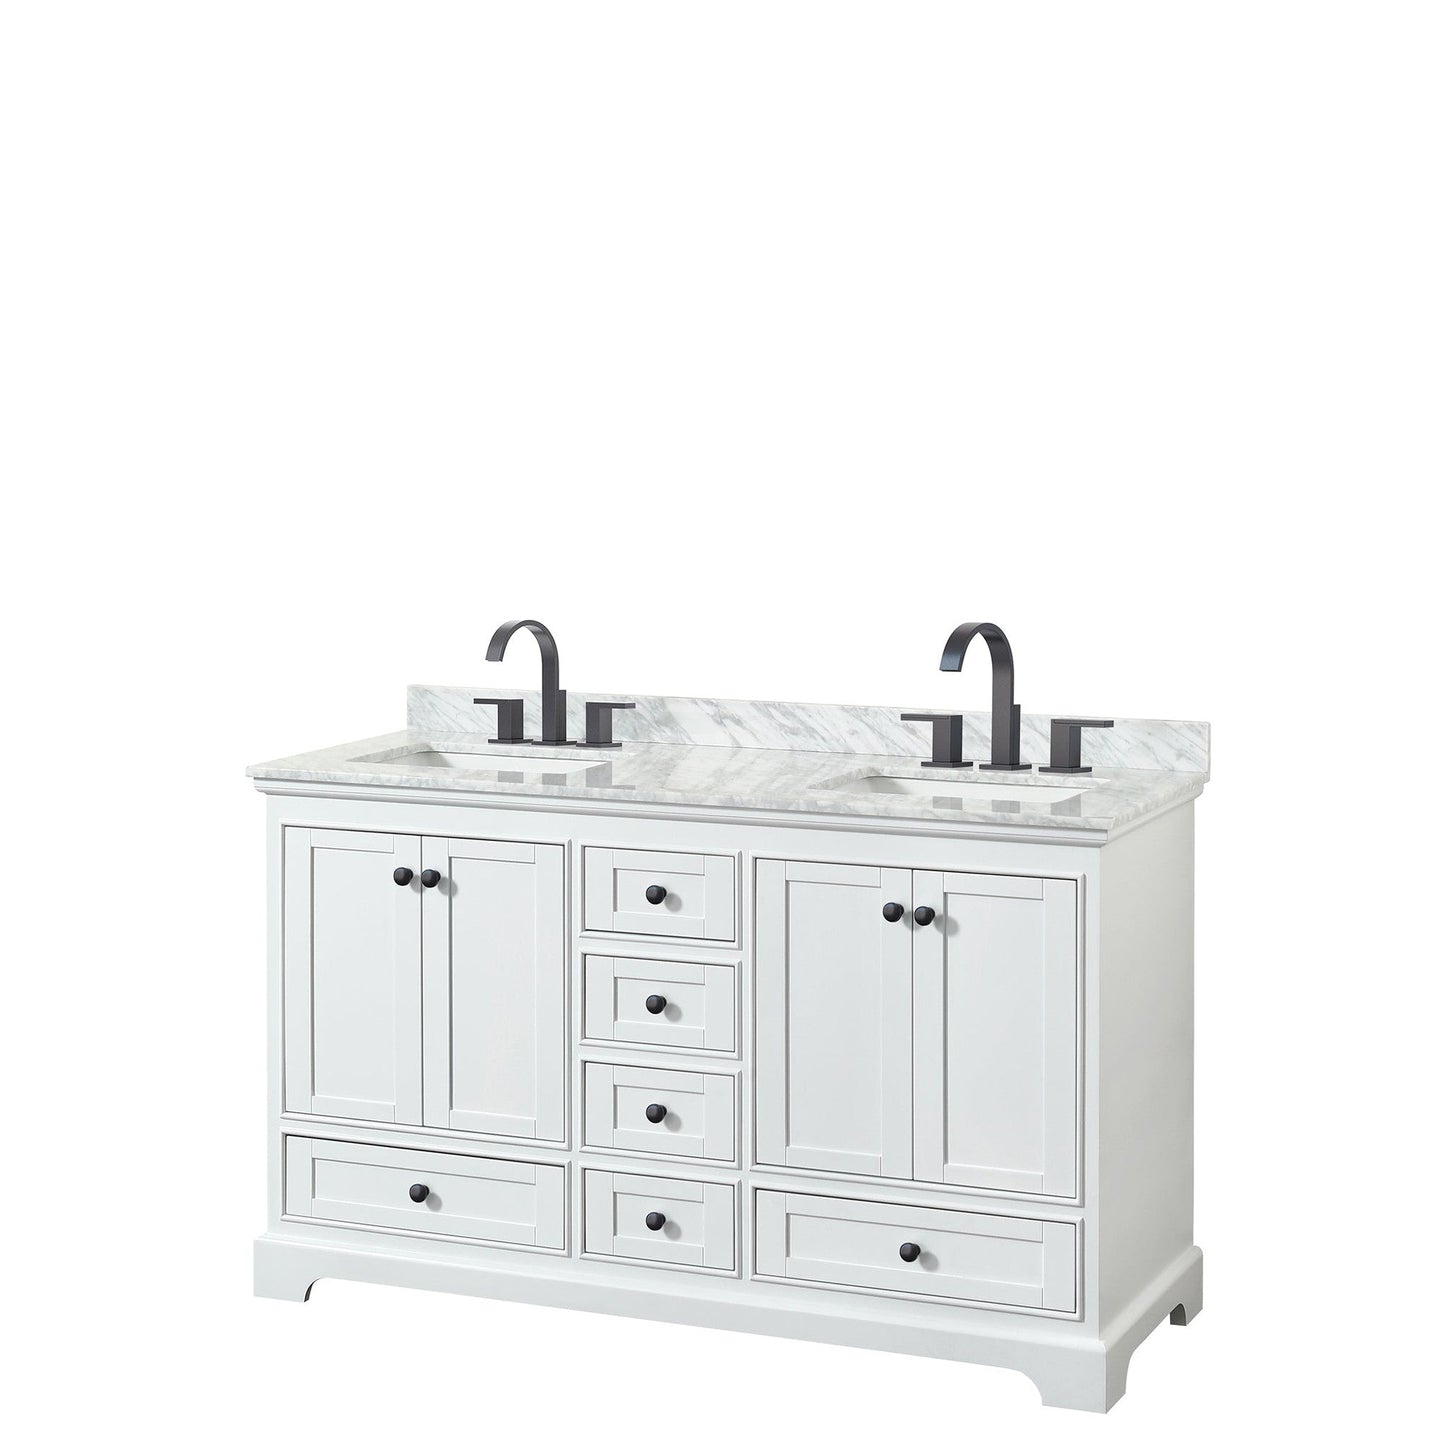 Deborah 60" Double Bathroom Vanity in White, White Carrara Marble Countertop, Undermount Square Sinks, Matte Black Trim